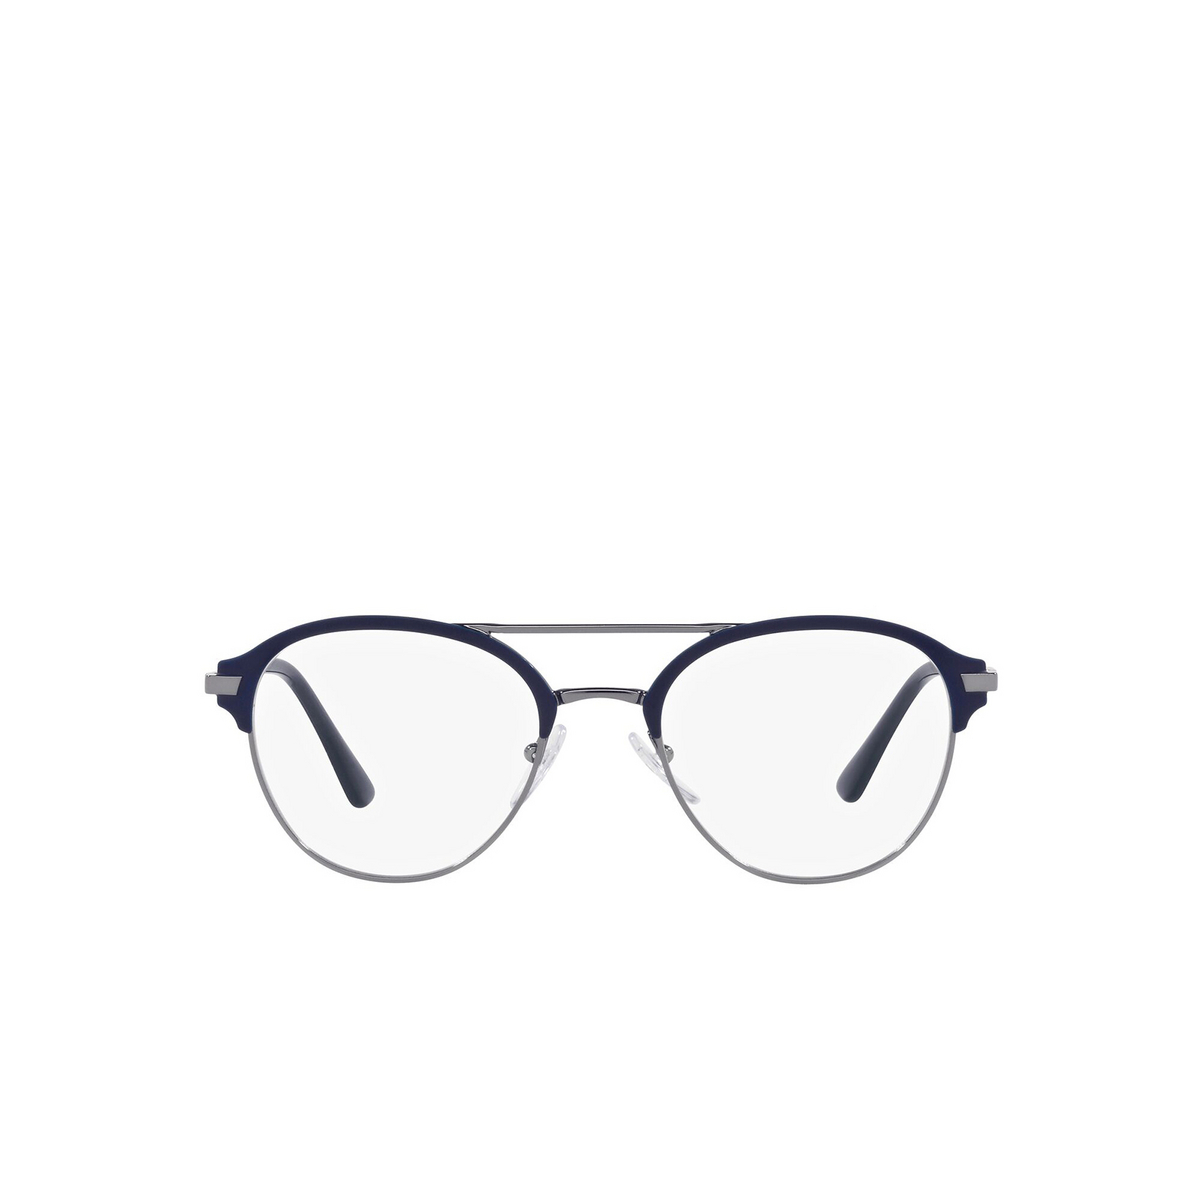 Prada® Aviator Eyeglasses: PR 61WV color Matte Baltic / Gunmetal 02N1O1 - front view.